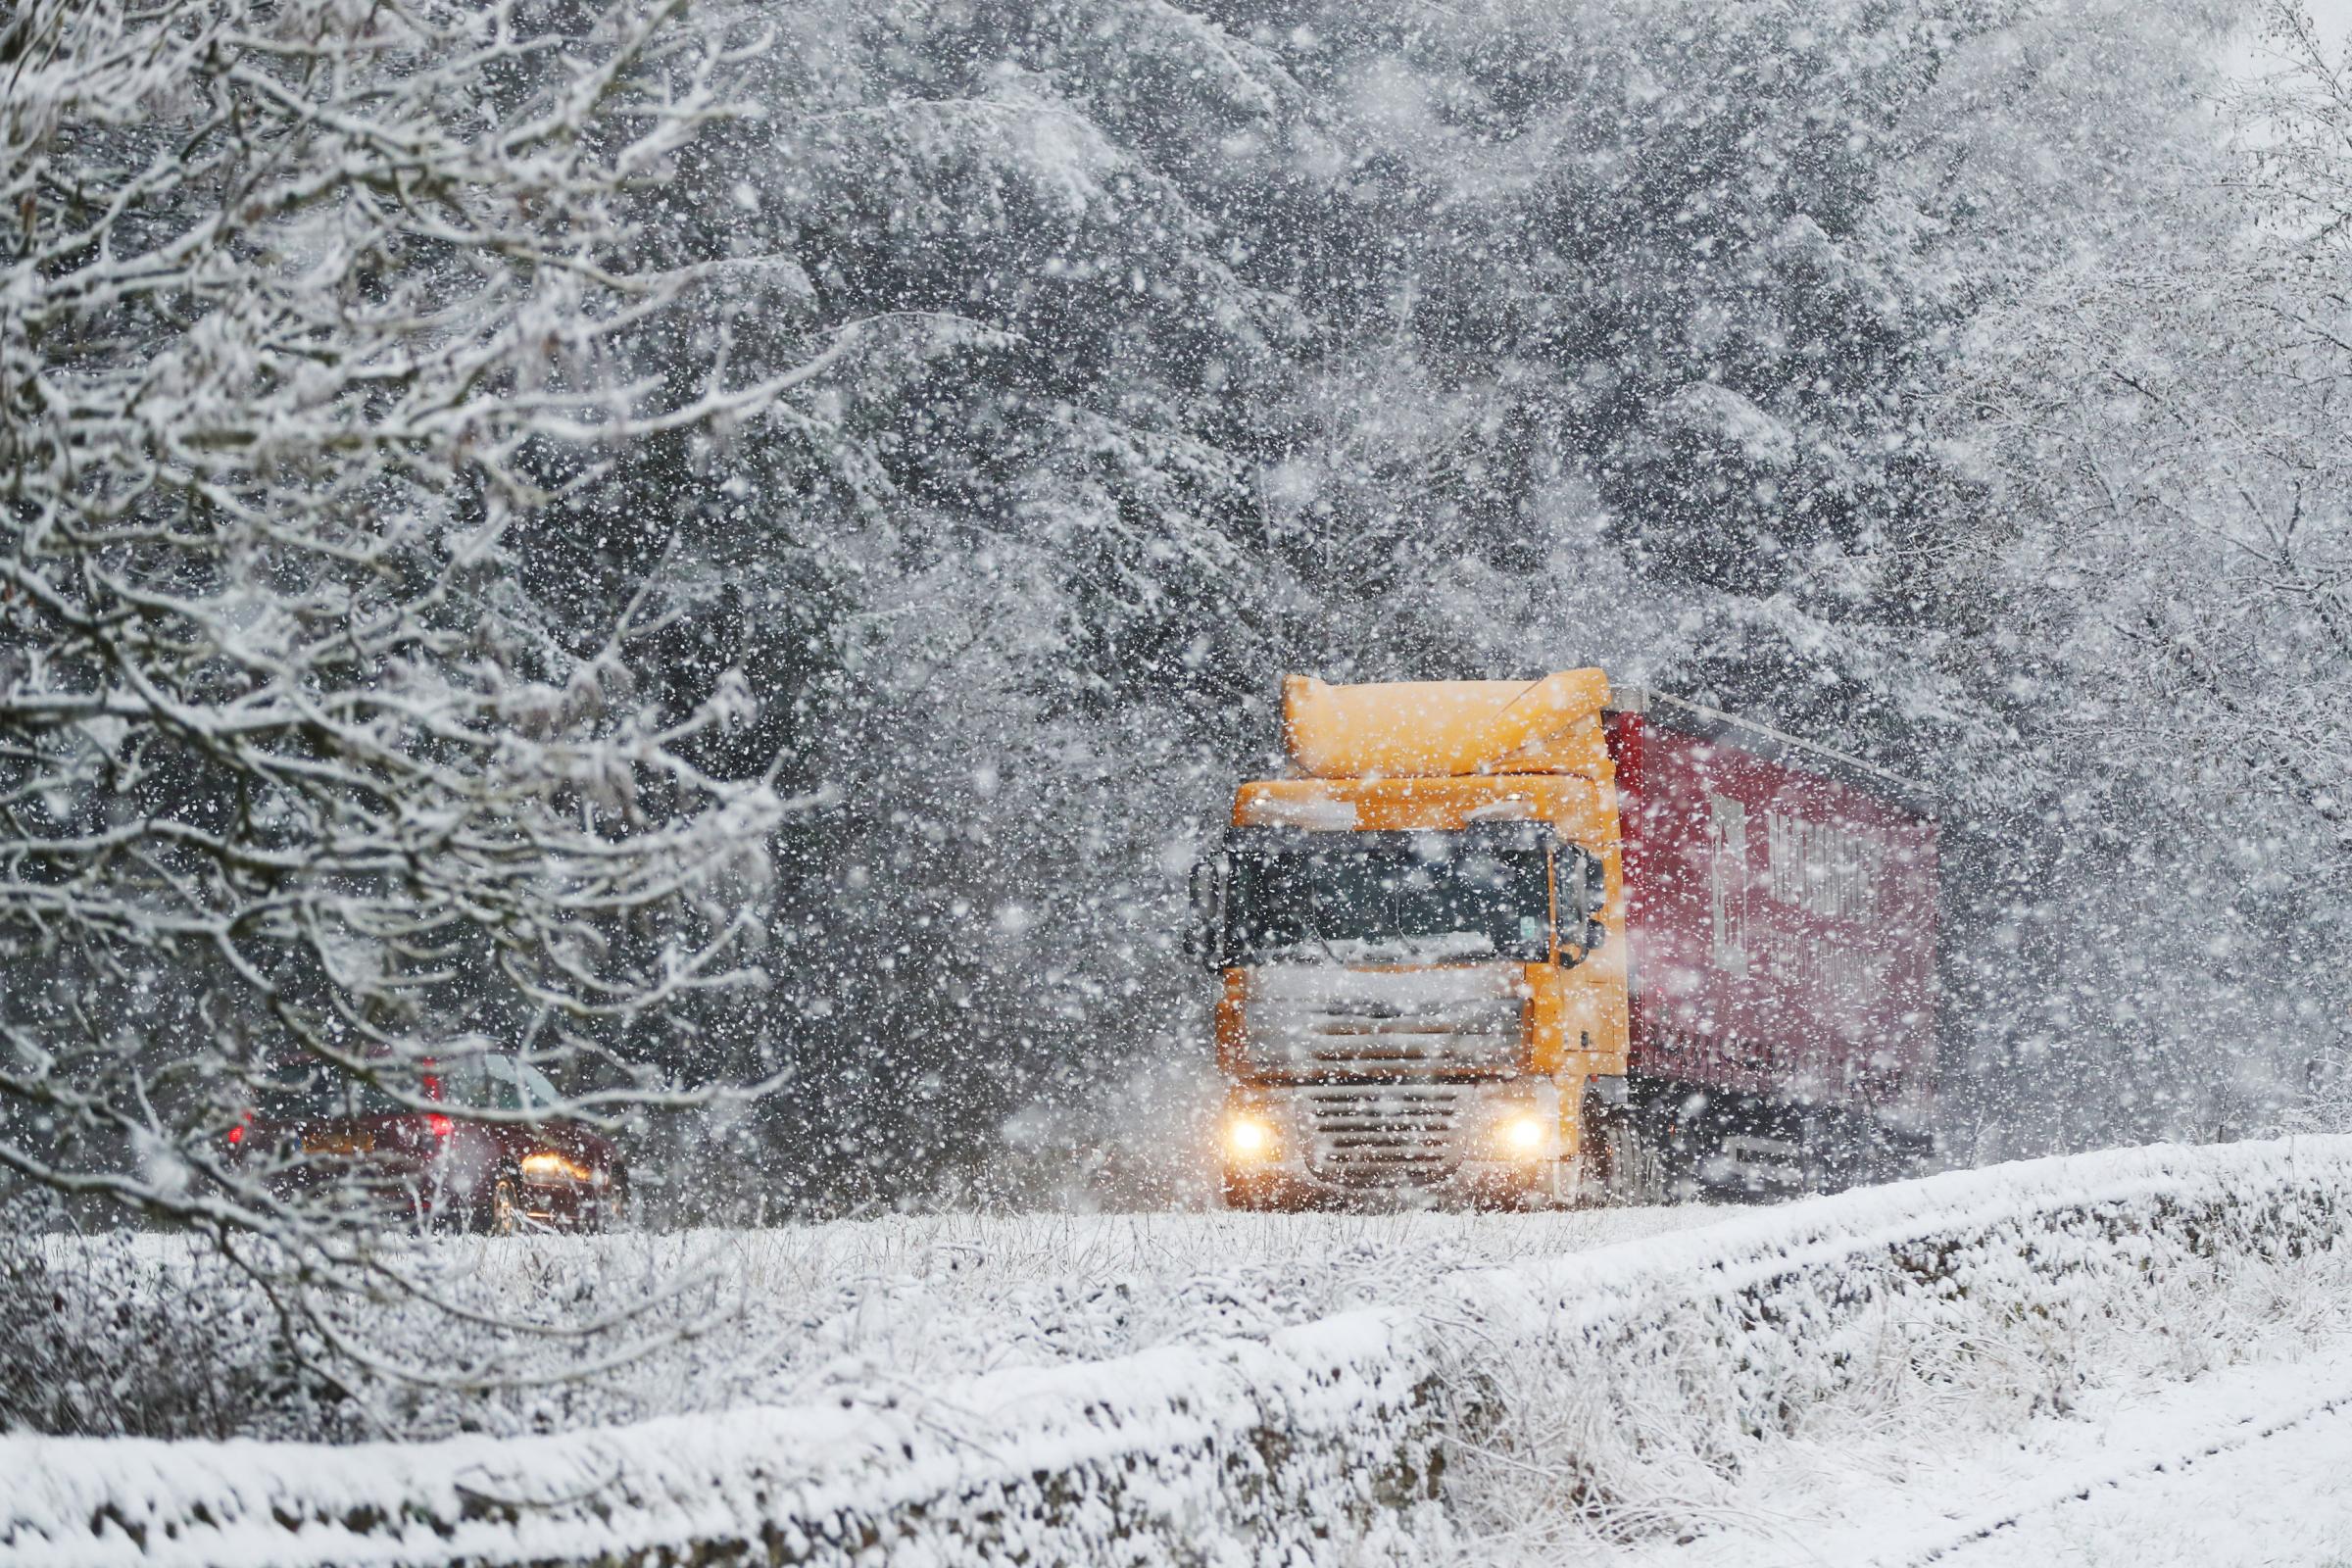 Heavy snowfall hits region causing disruption on roads